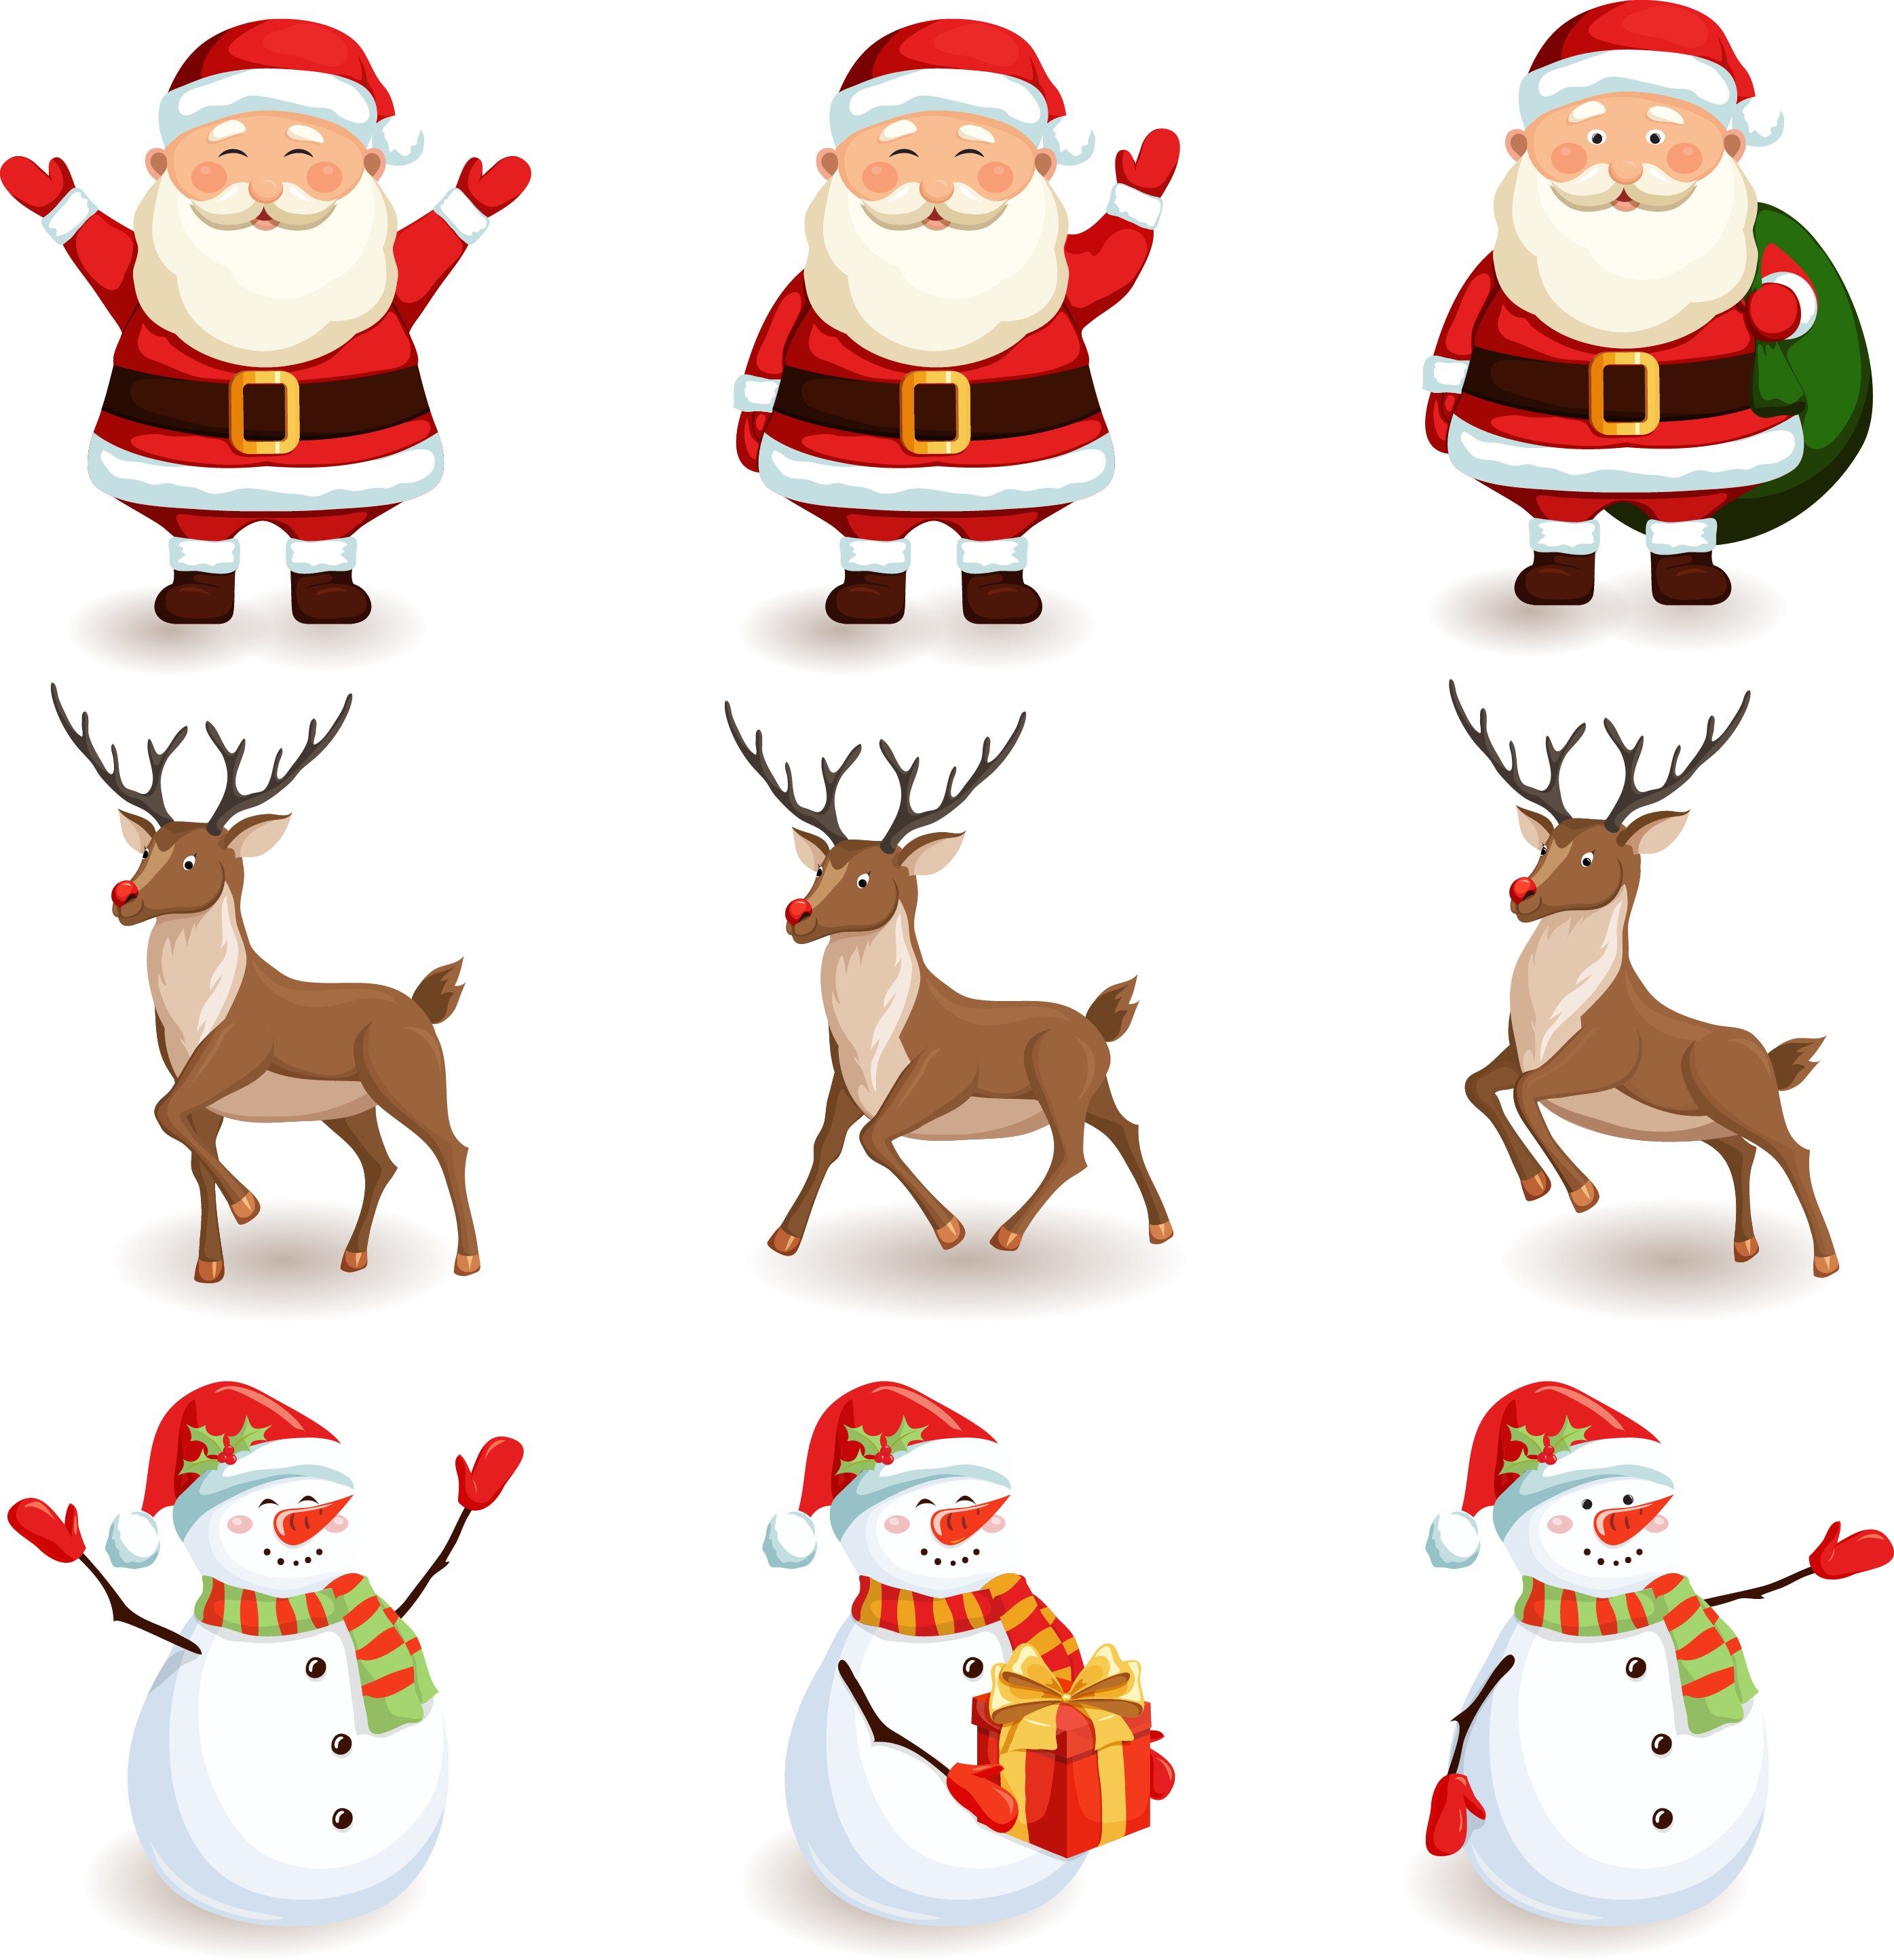 And Snowman Material Claus Deer Reindeer Santa PNG Image